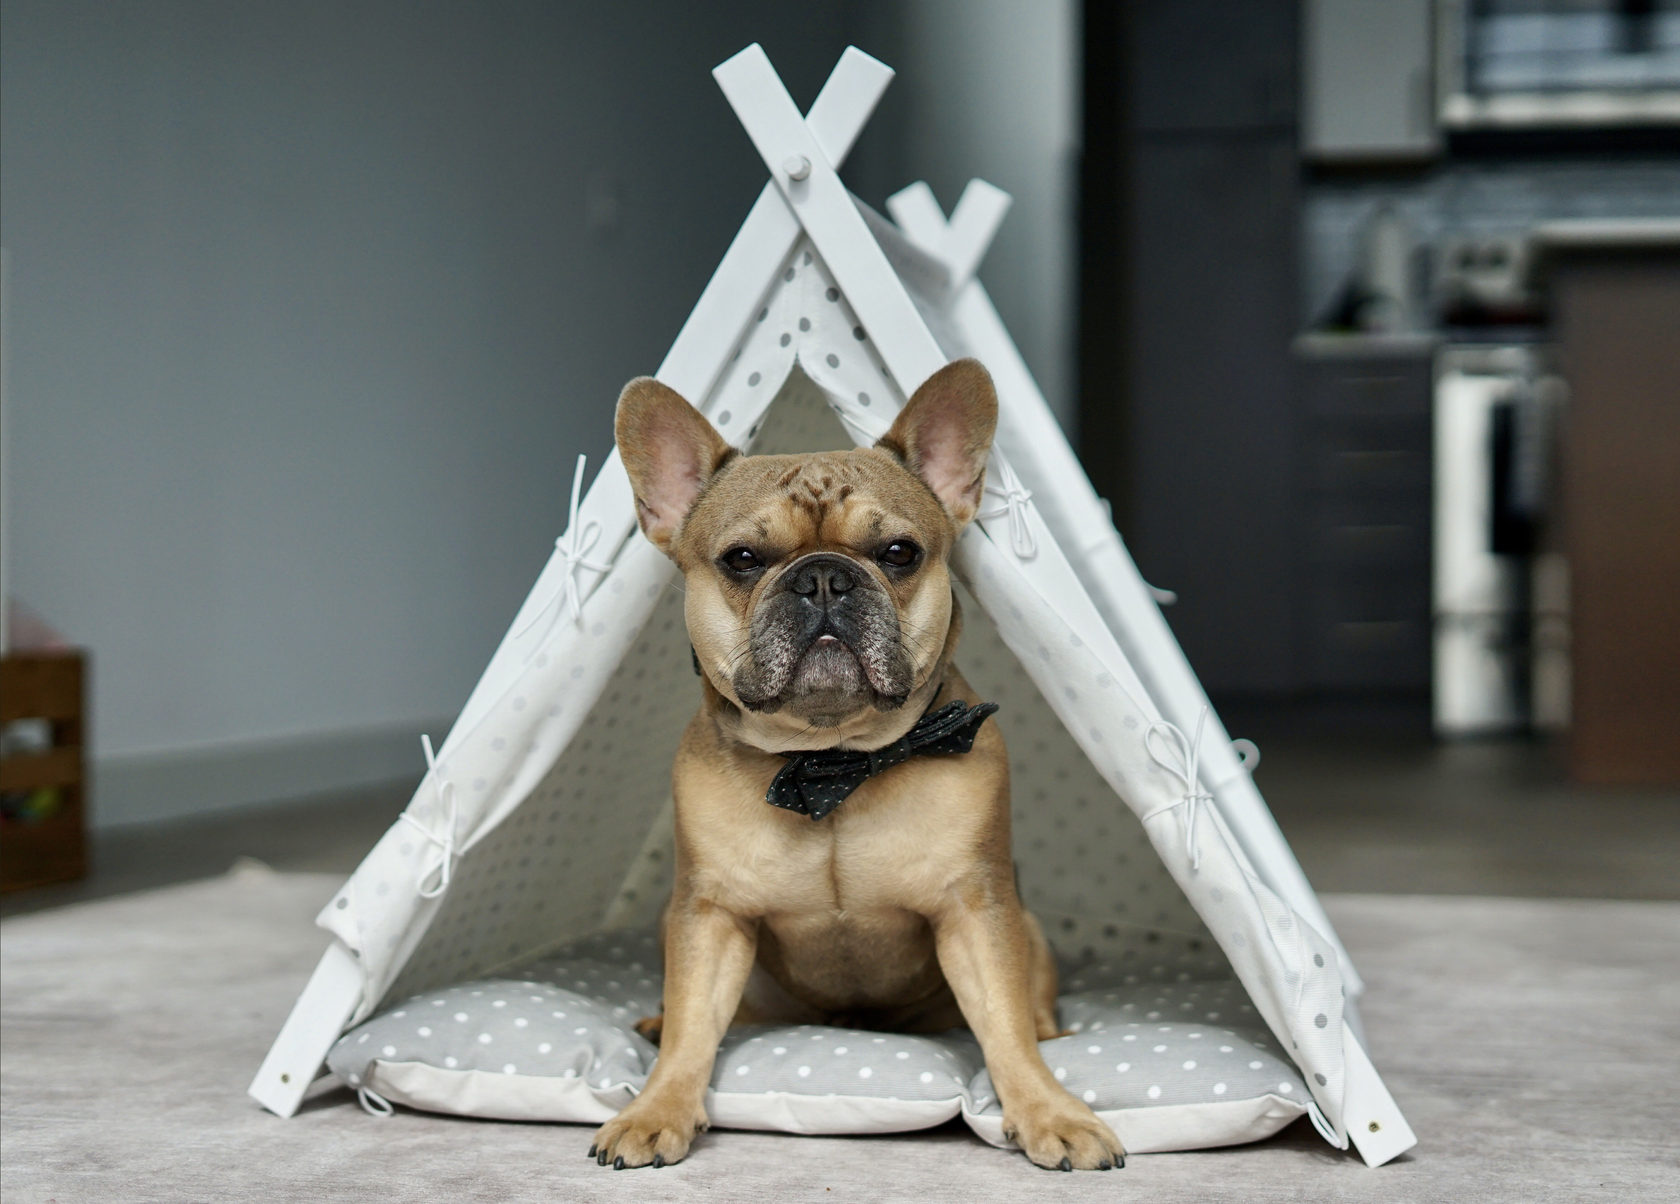 French Bulldog enjoying the Tee Pee lifestyle. Creative pet beds by DogAndTeepee.